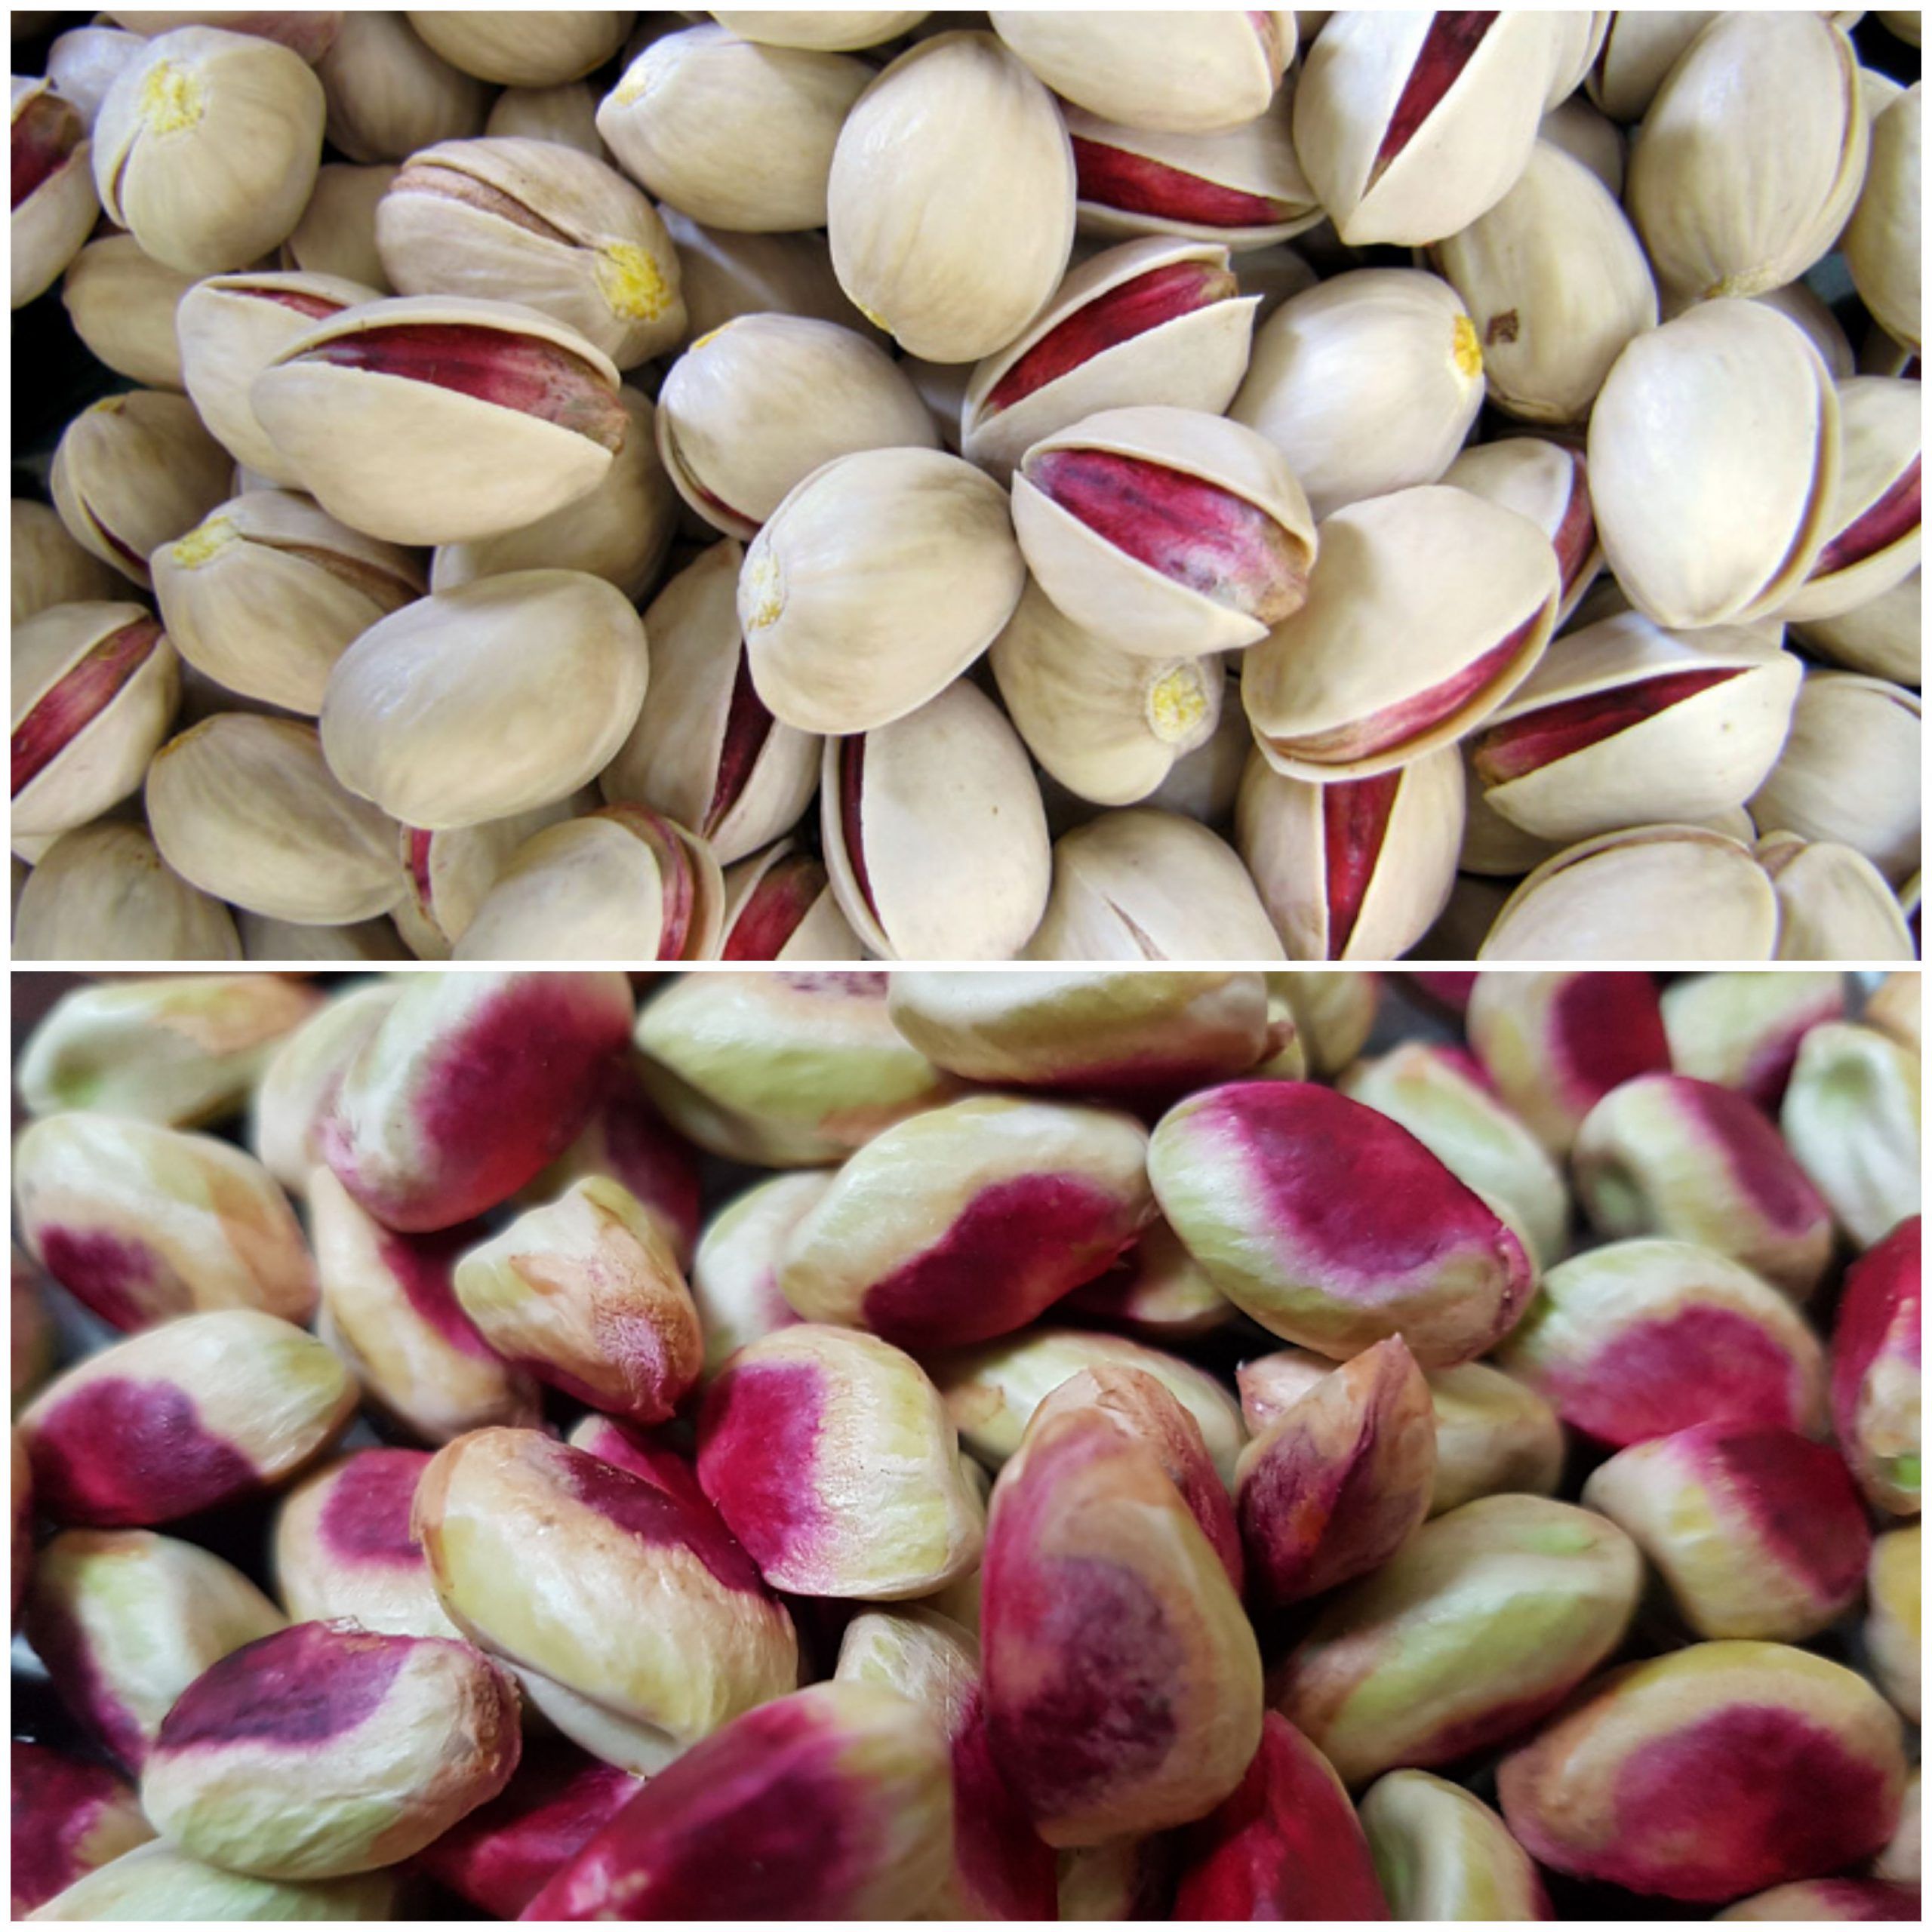 Sale of Ahmad Aghaei pistachios in Hyderabad, India